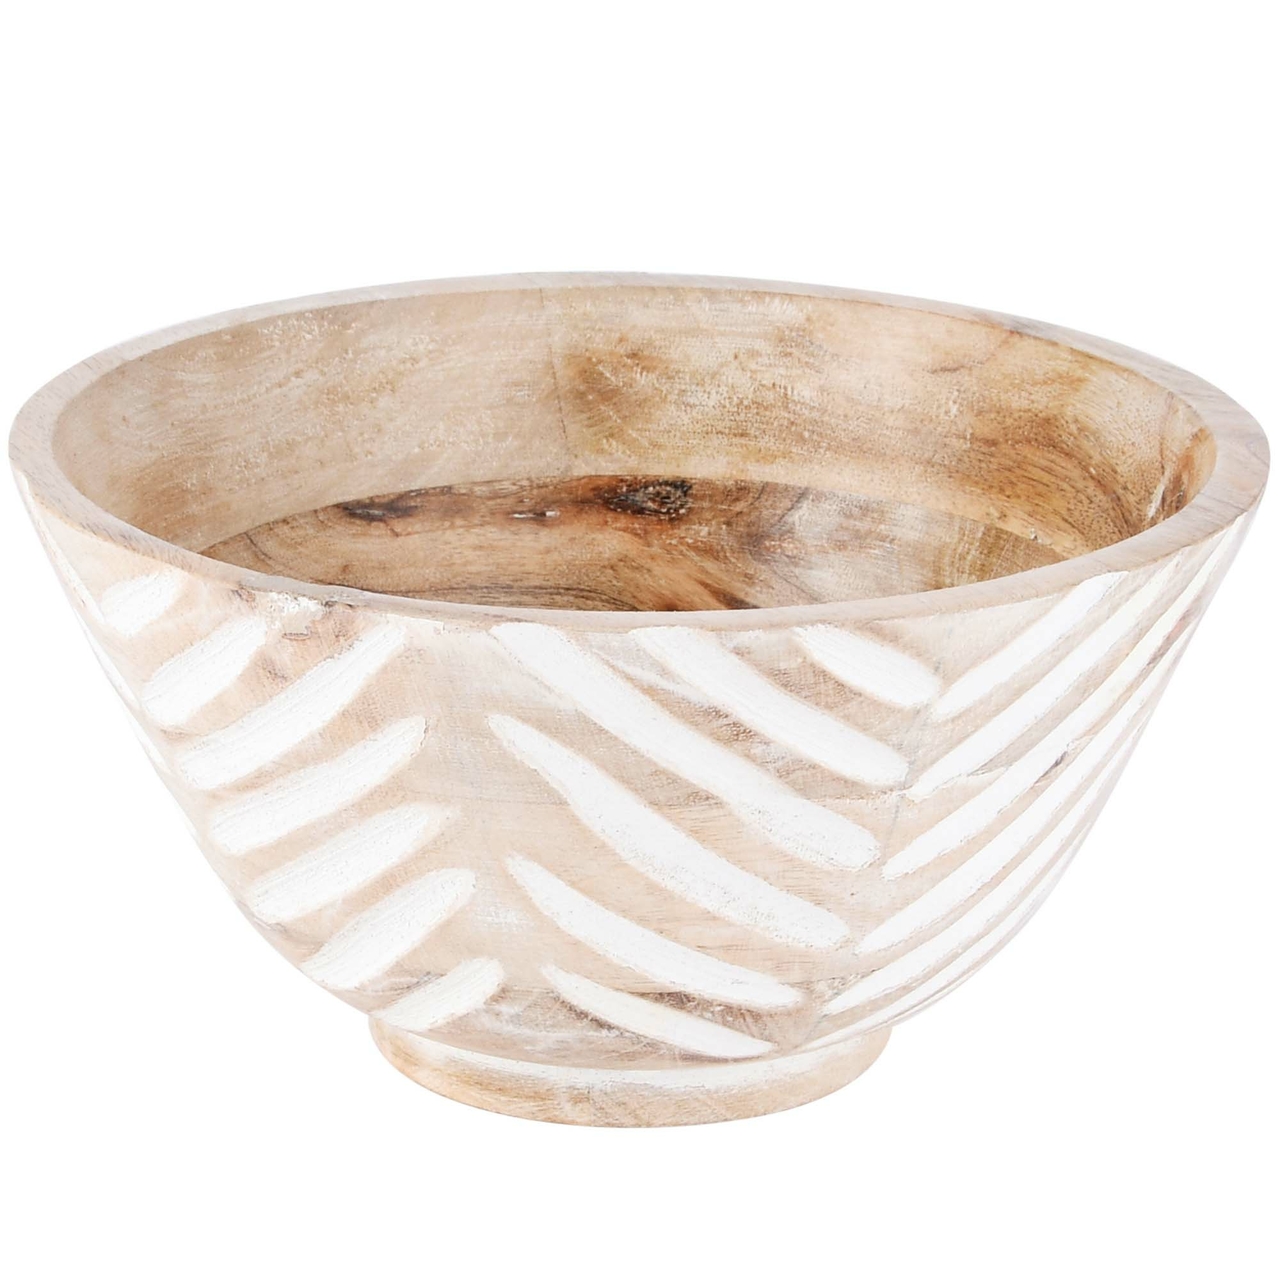 Dekoratief | Bowl 'Carved', naturel/wit, hout, 20x20x10cm | A228262